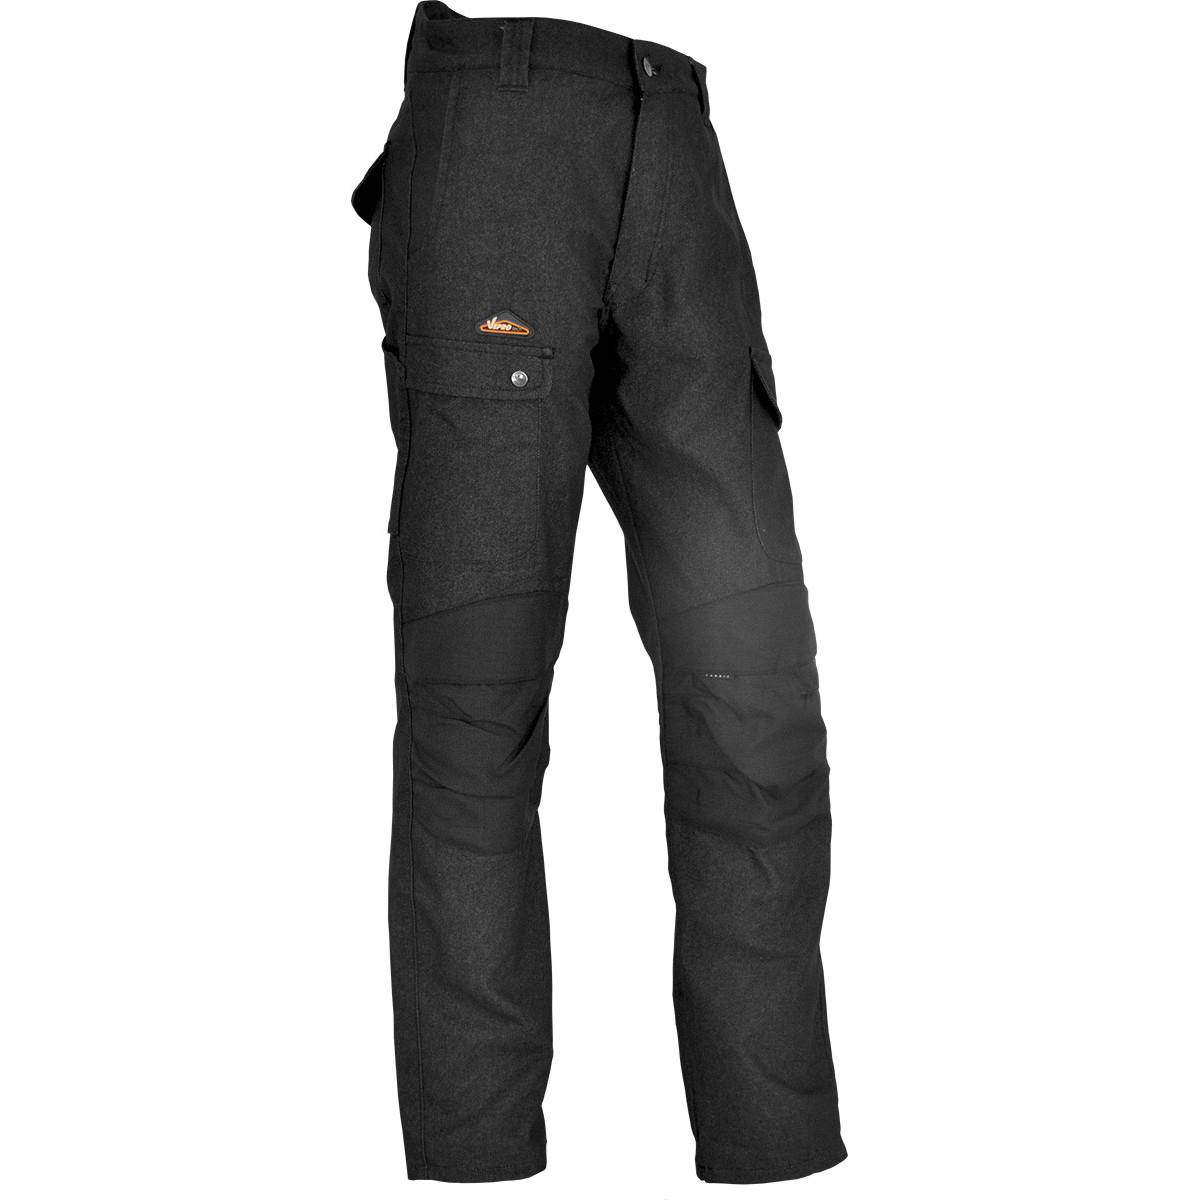 ENDU work trousers size 46, black